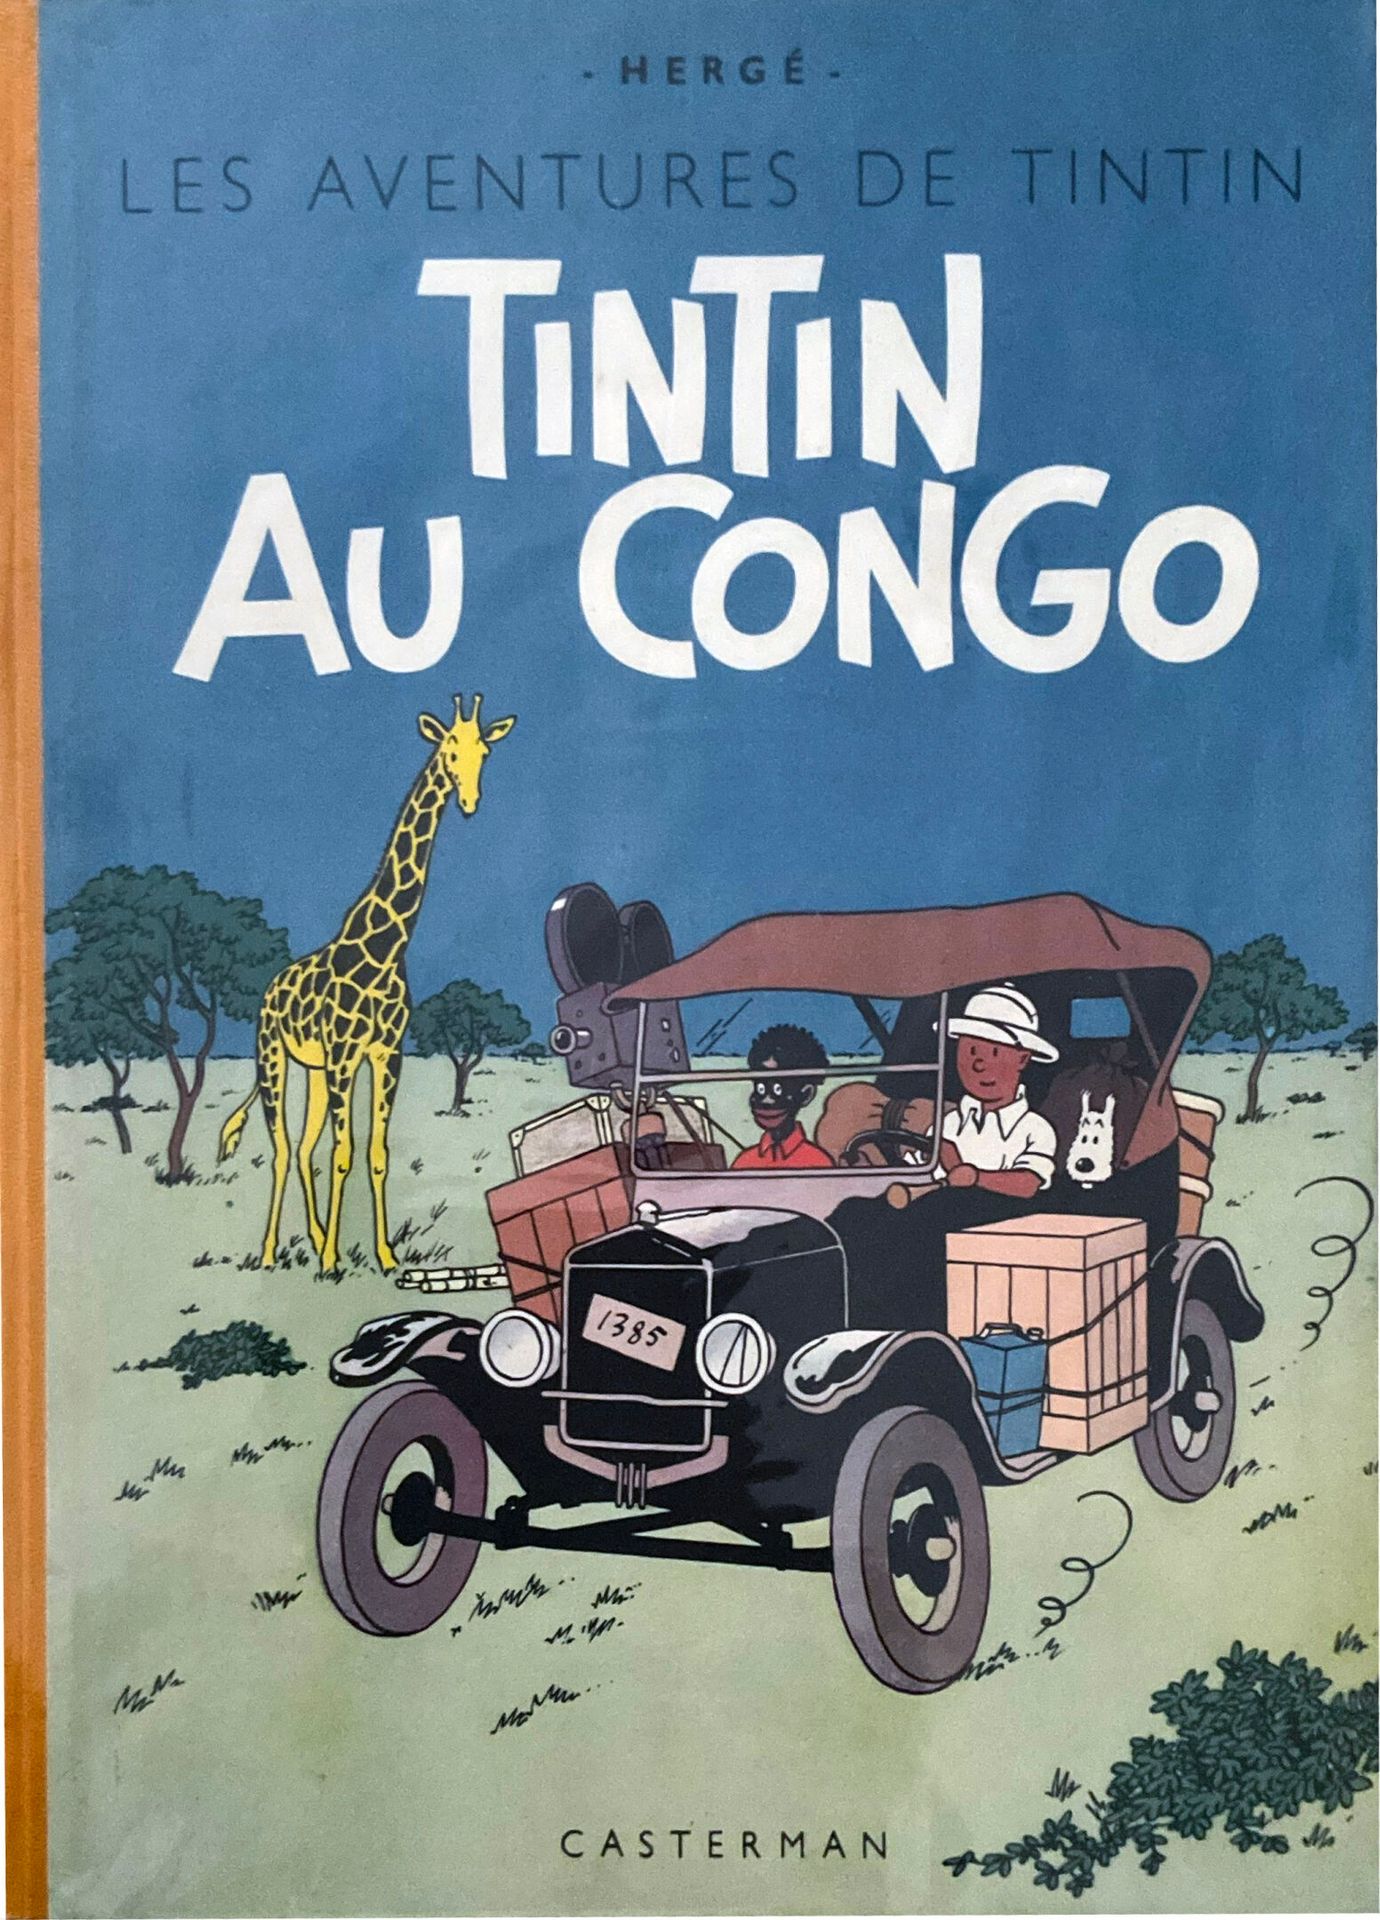 GEORGES REMI DIT HERGÉ (1907-1983) GEORGES REMI DIT HERGÉ (1907-1983)
Tintin au &hellip;